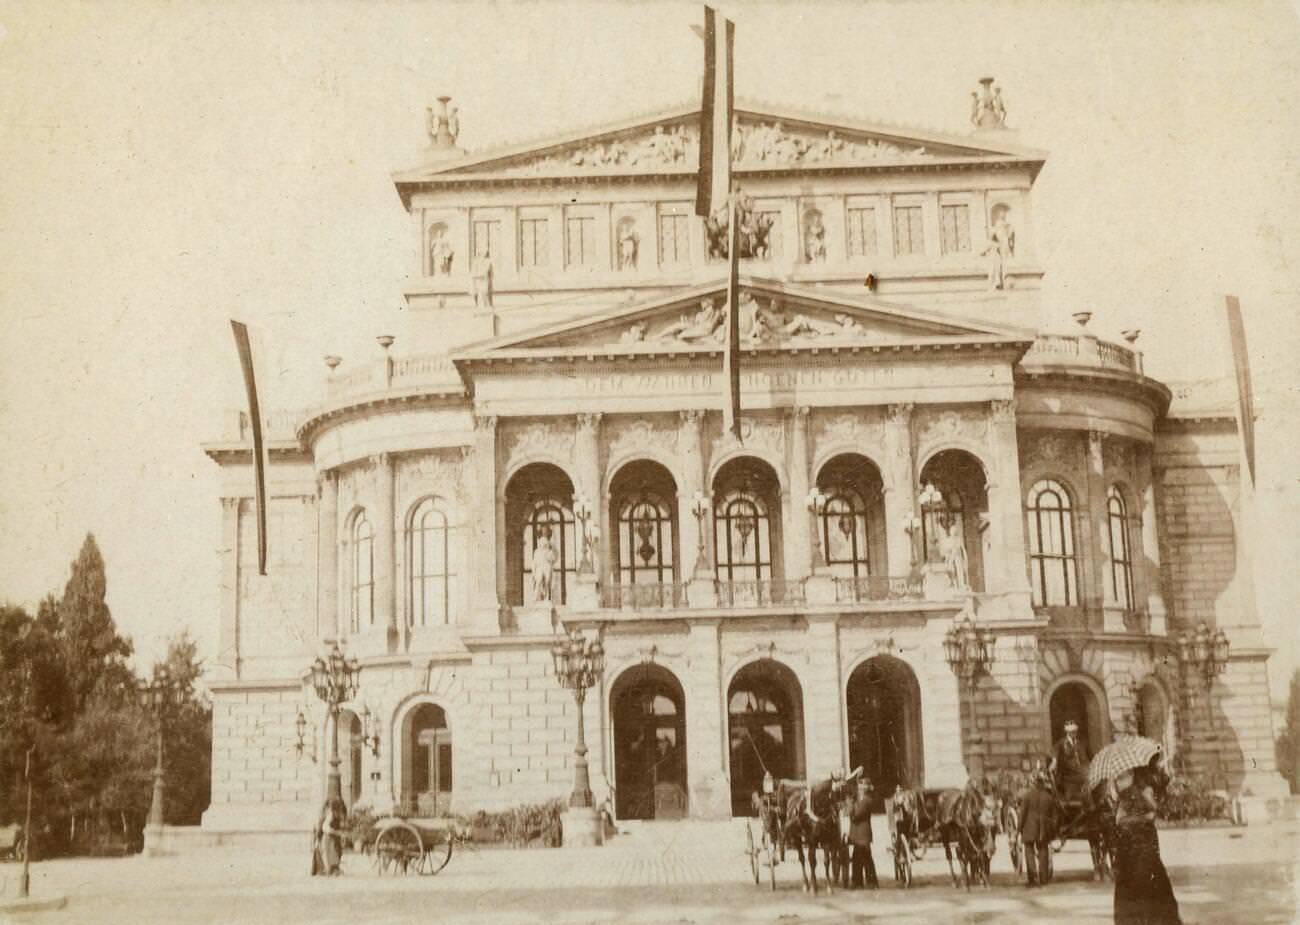 View of the Opera House, Frankfurt, Germany, 1890s.